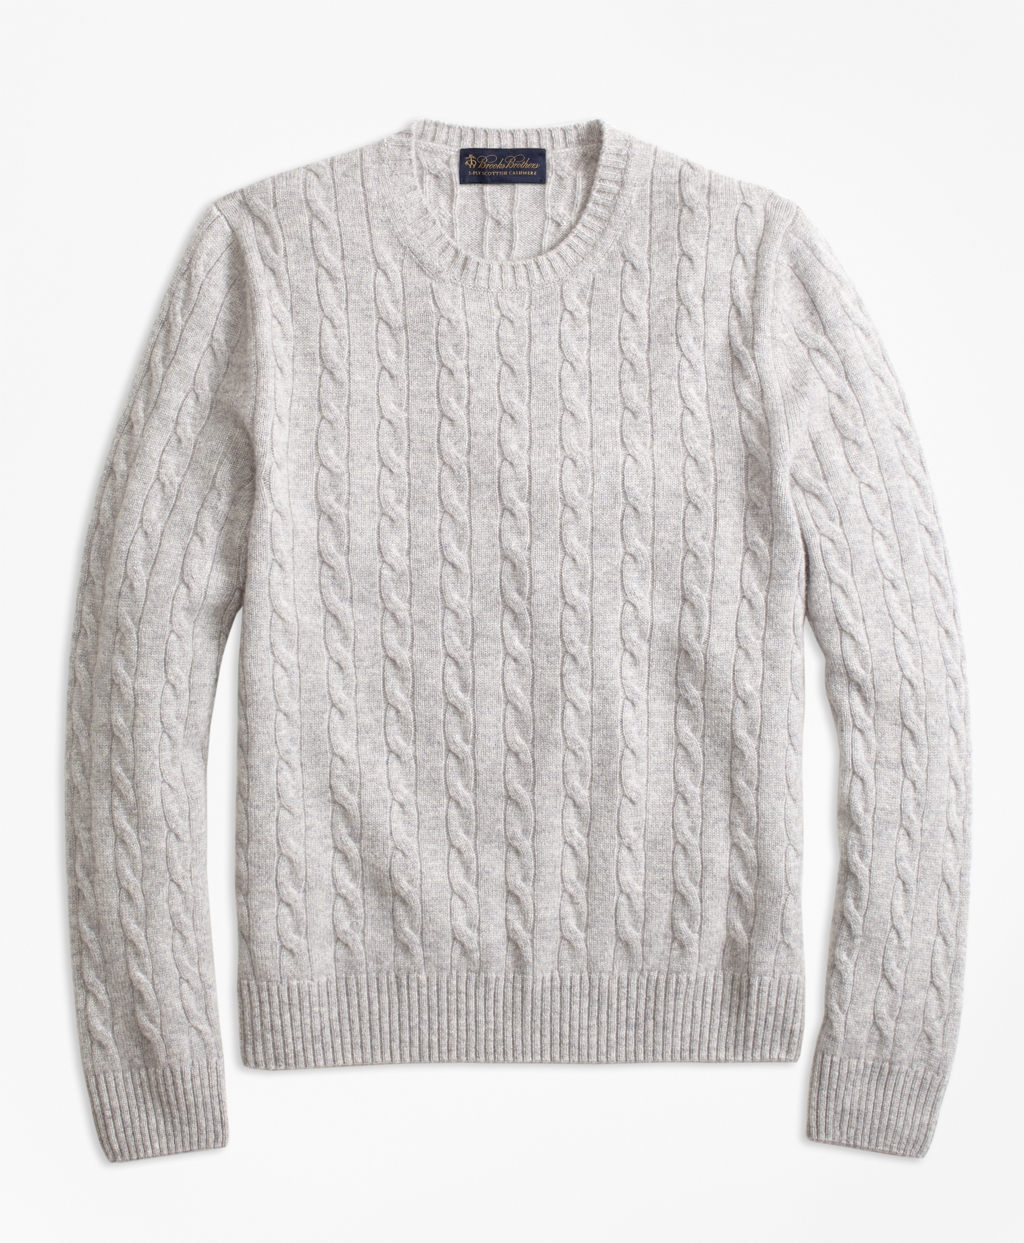 Brooks Brothers cashmere sweater